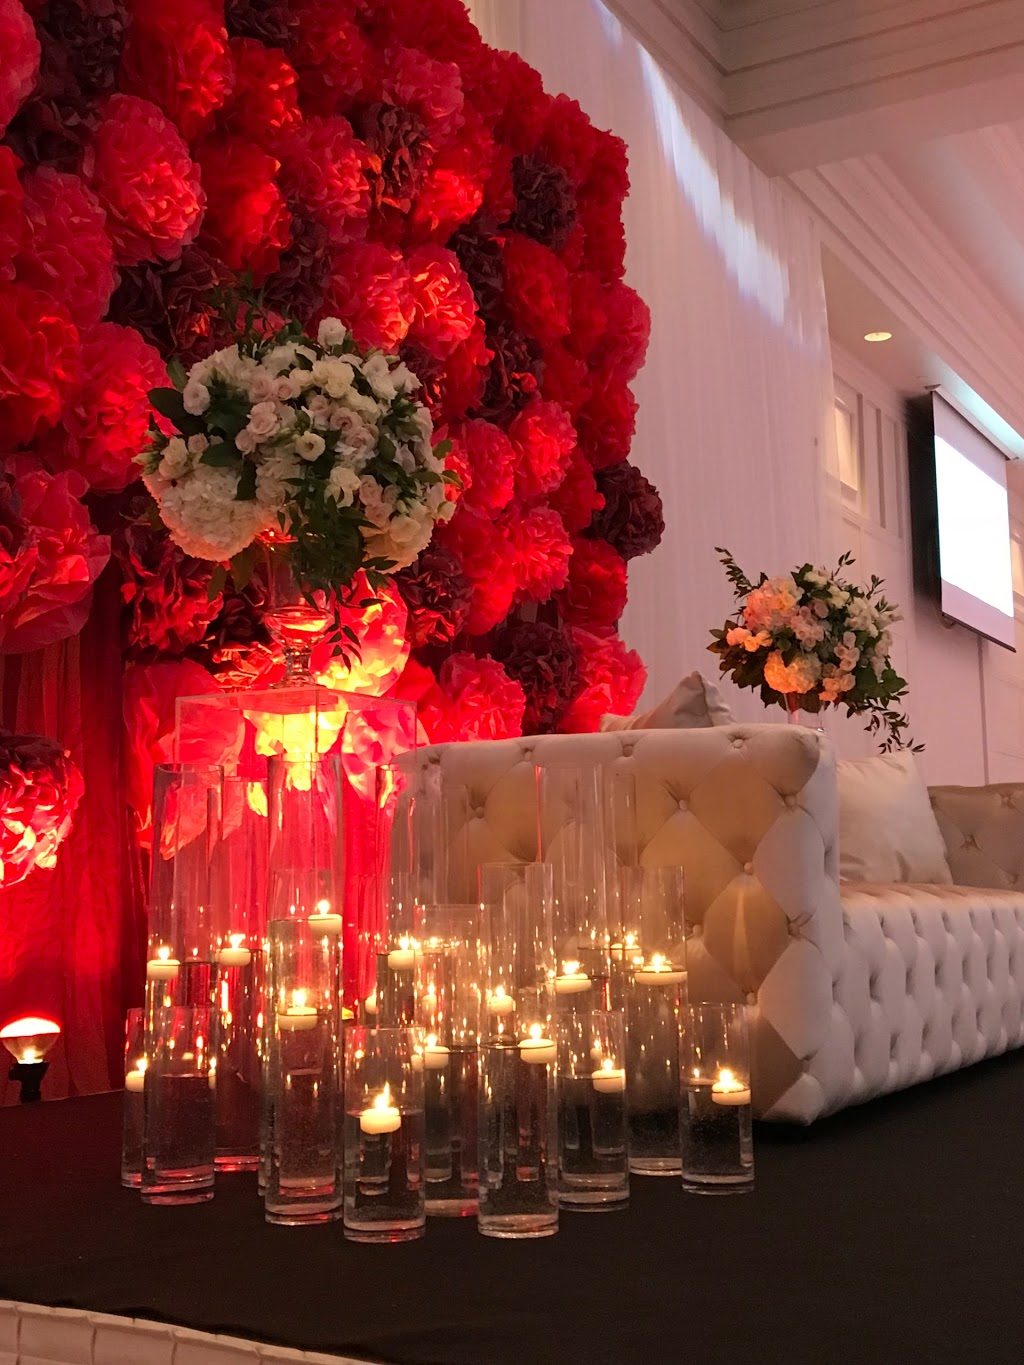 SOIRÉE Luxury Weddings & Event Decor | point of interest | 14 Castlegate Blvd, Brampton, ON L6P 2L4, Canada | 4169499521 OR +1 416-949-9521